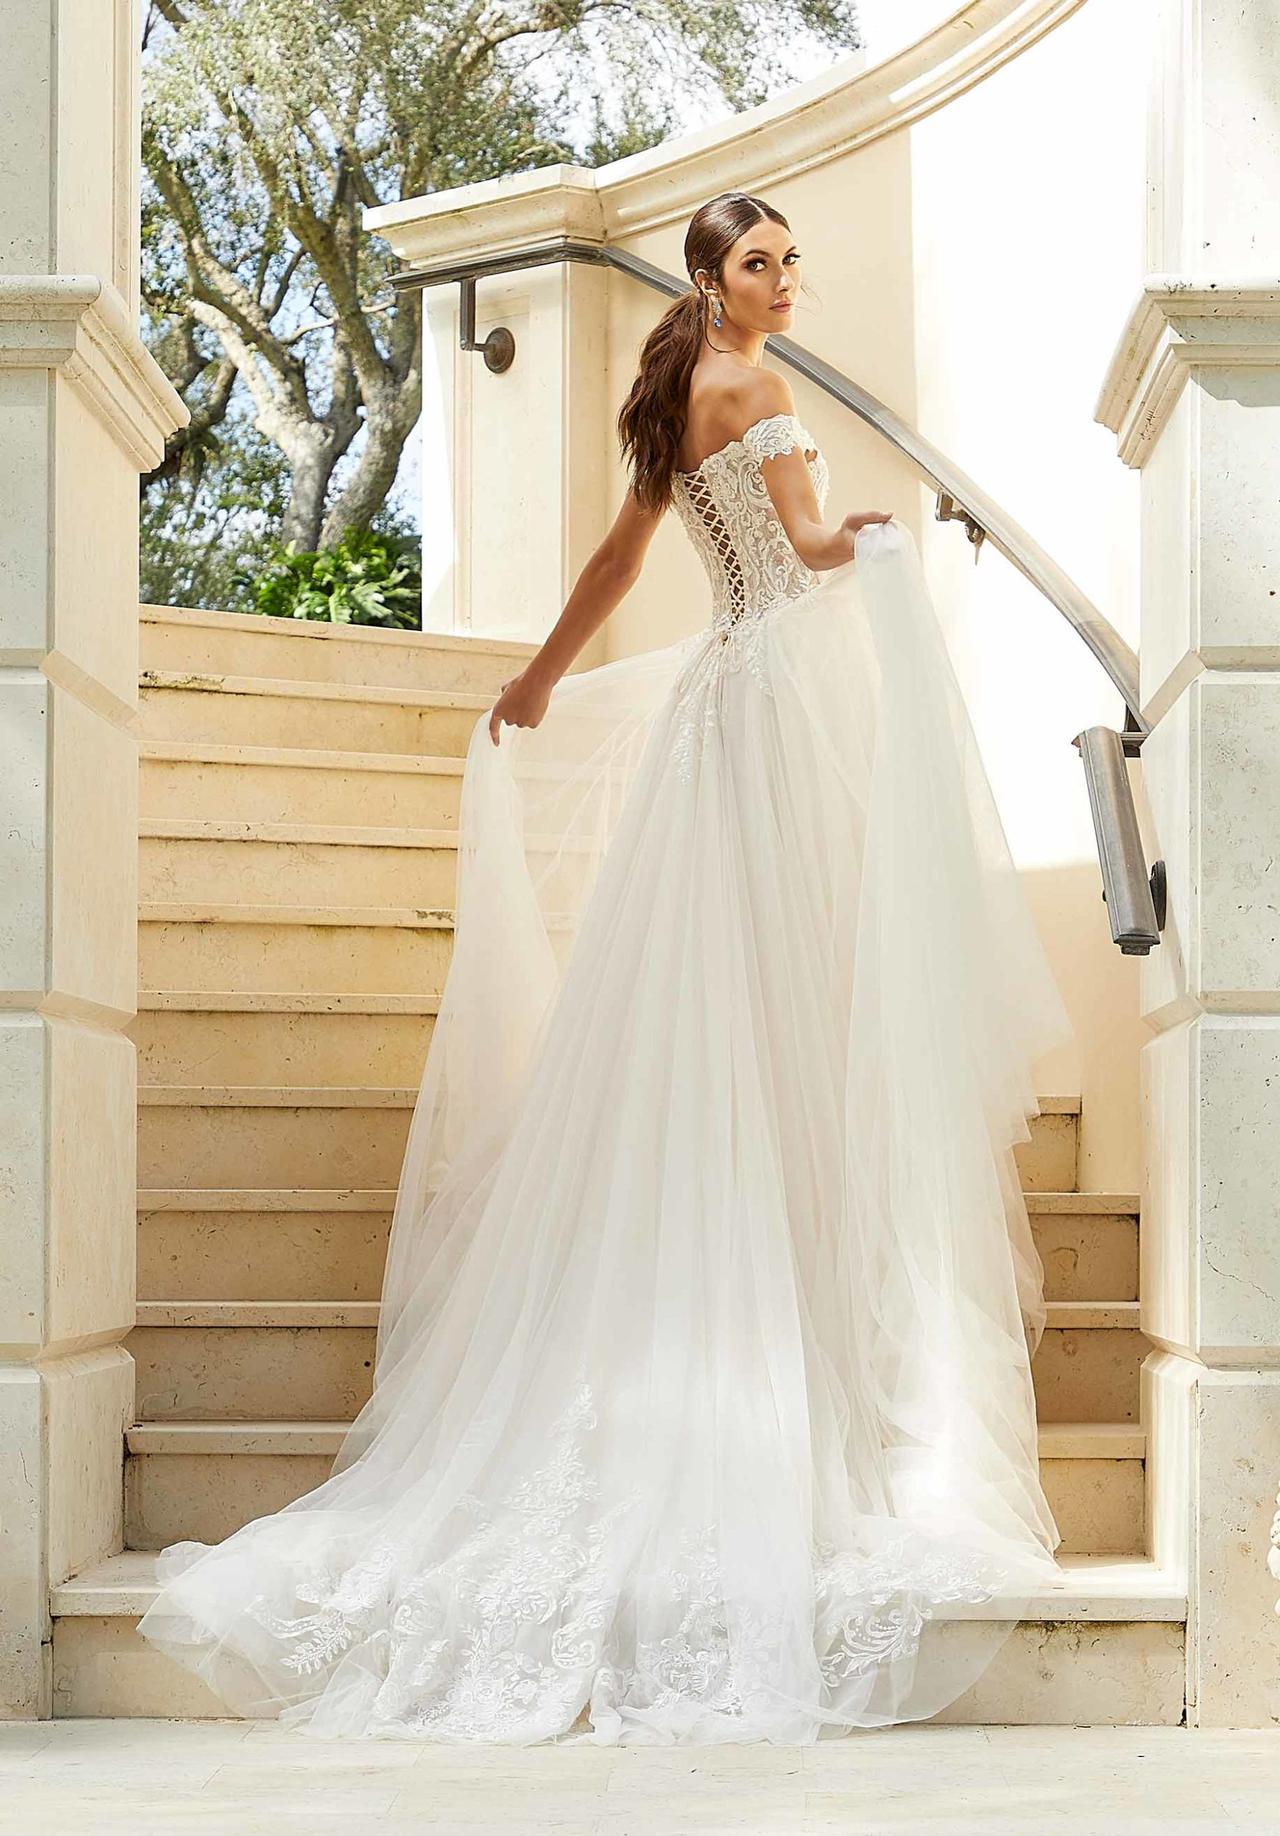 Corset Wedding Dresses - Bridal Gowns